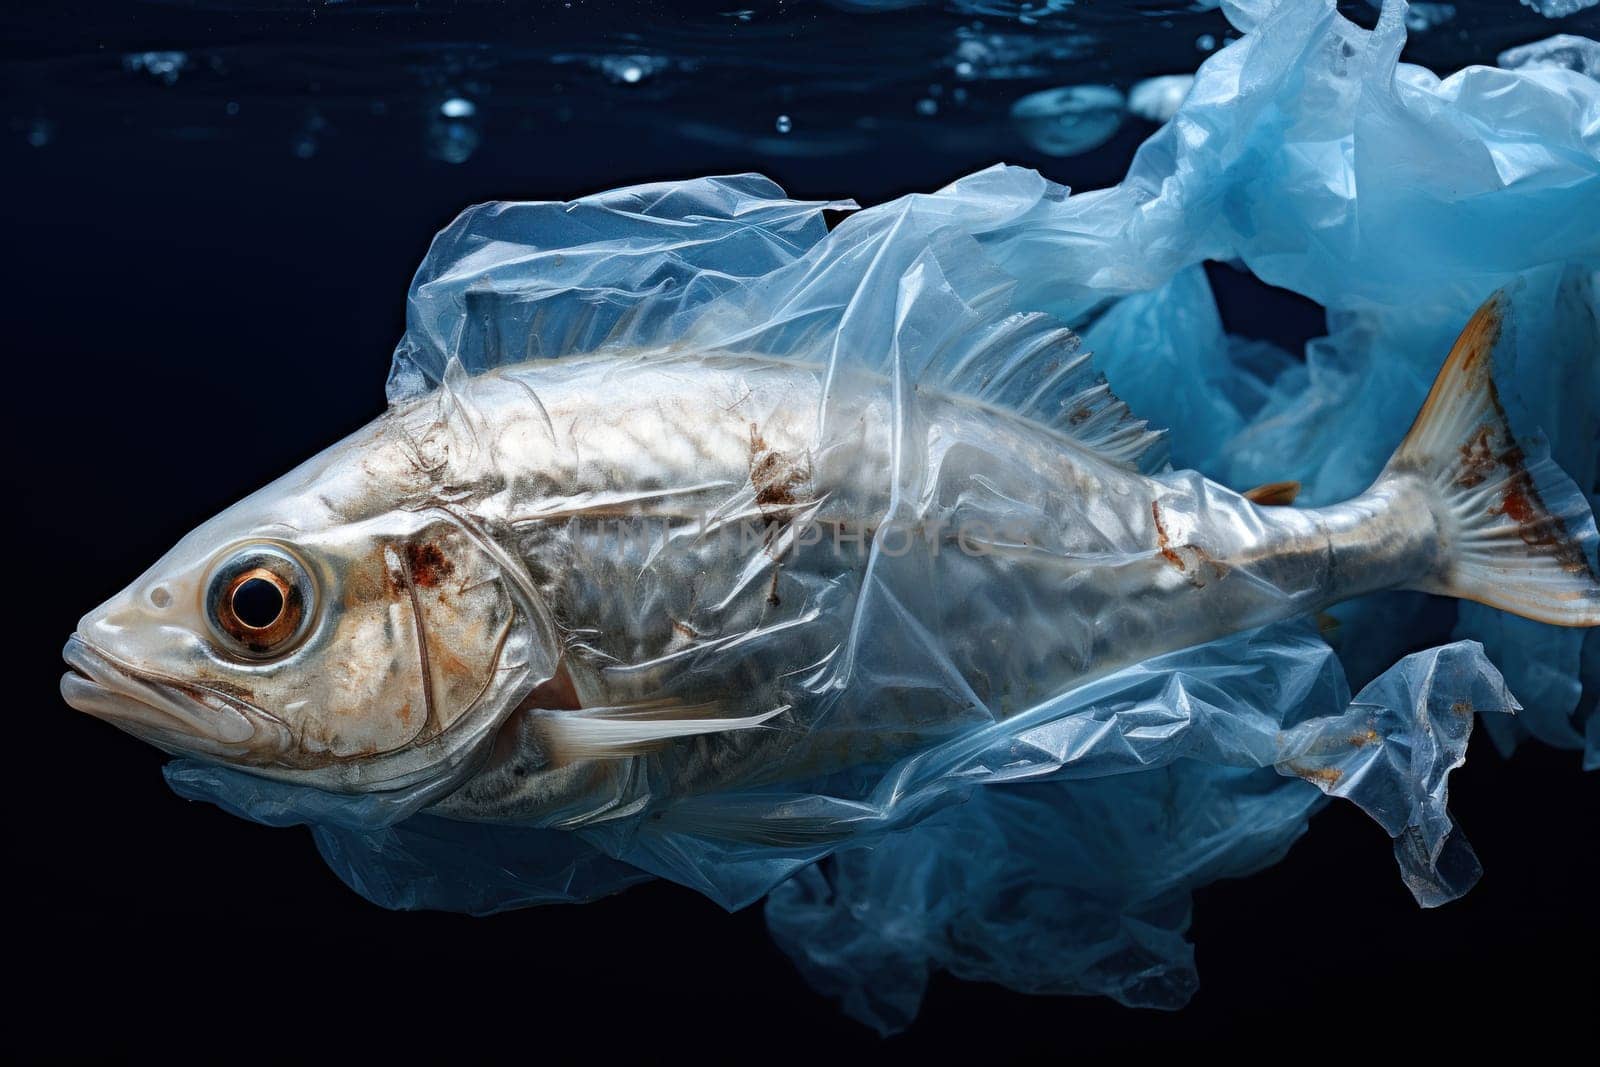 Fish Trapped in Plastic Underwater by ugguggu